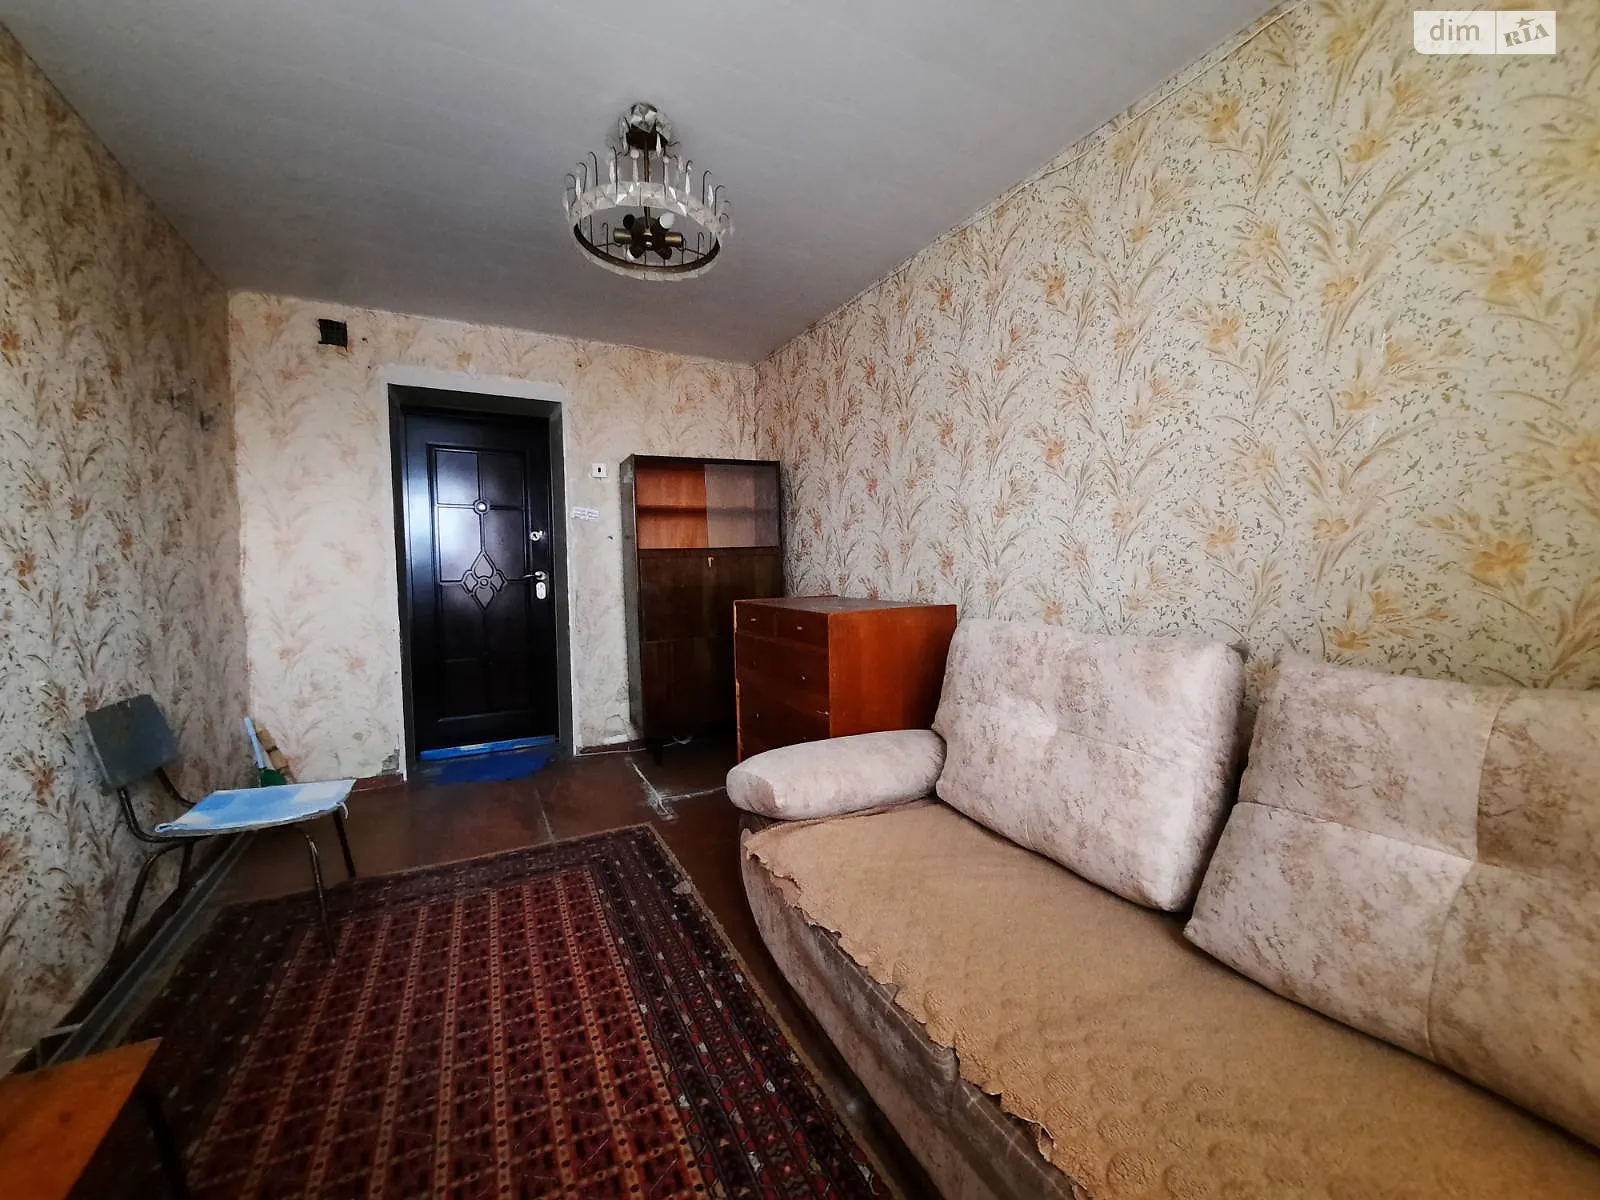 Продается комната 25 кв. м в Сумах, цена: 4500 $